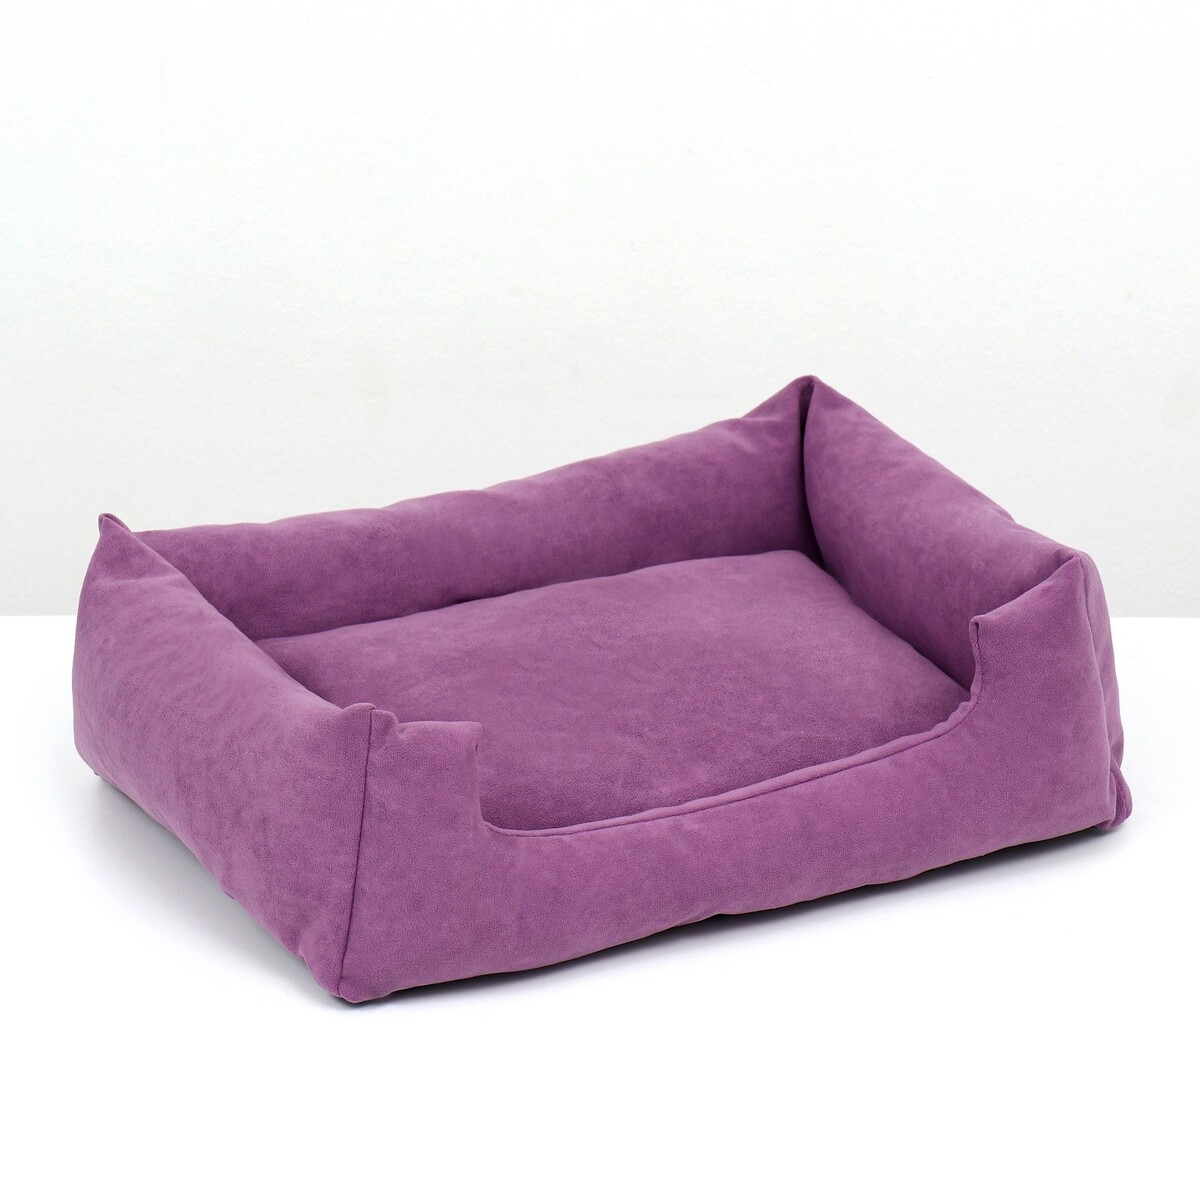 Лежанка-диван, 45 х 35 х 11 см, фиолетовая диван мягкий 52 х 42 х 10 см кашемир черно красный